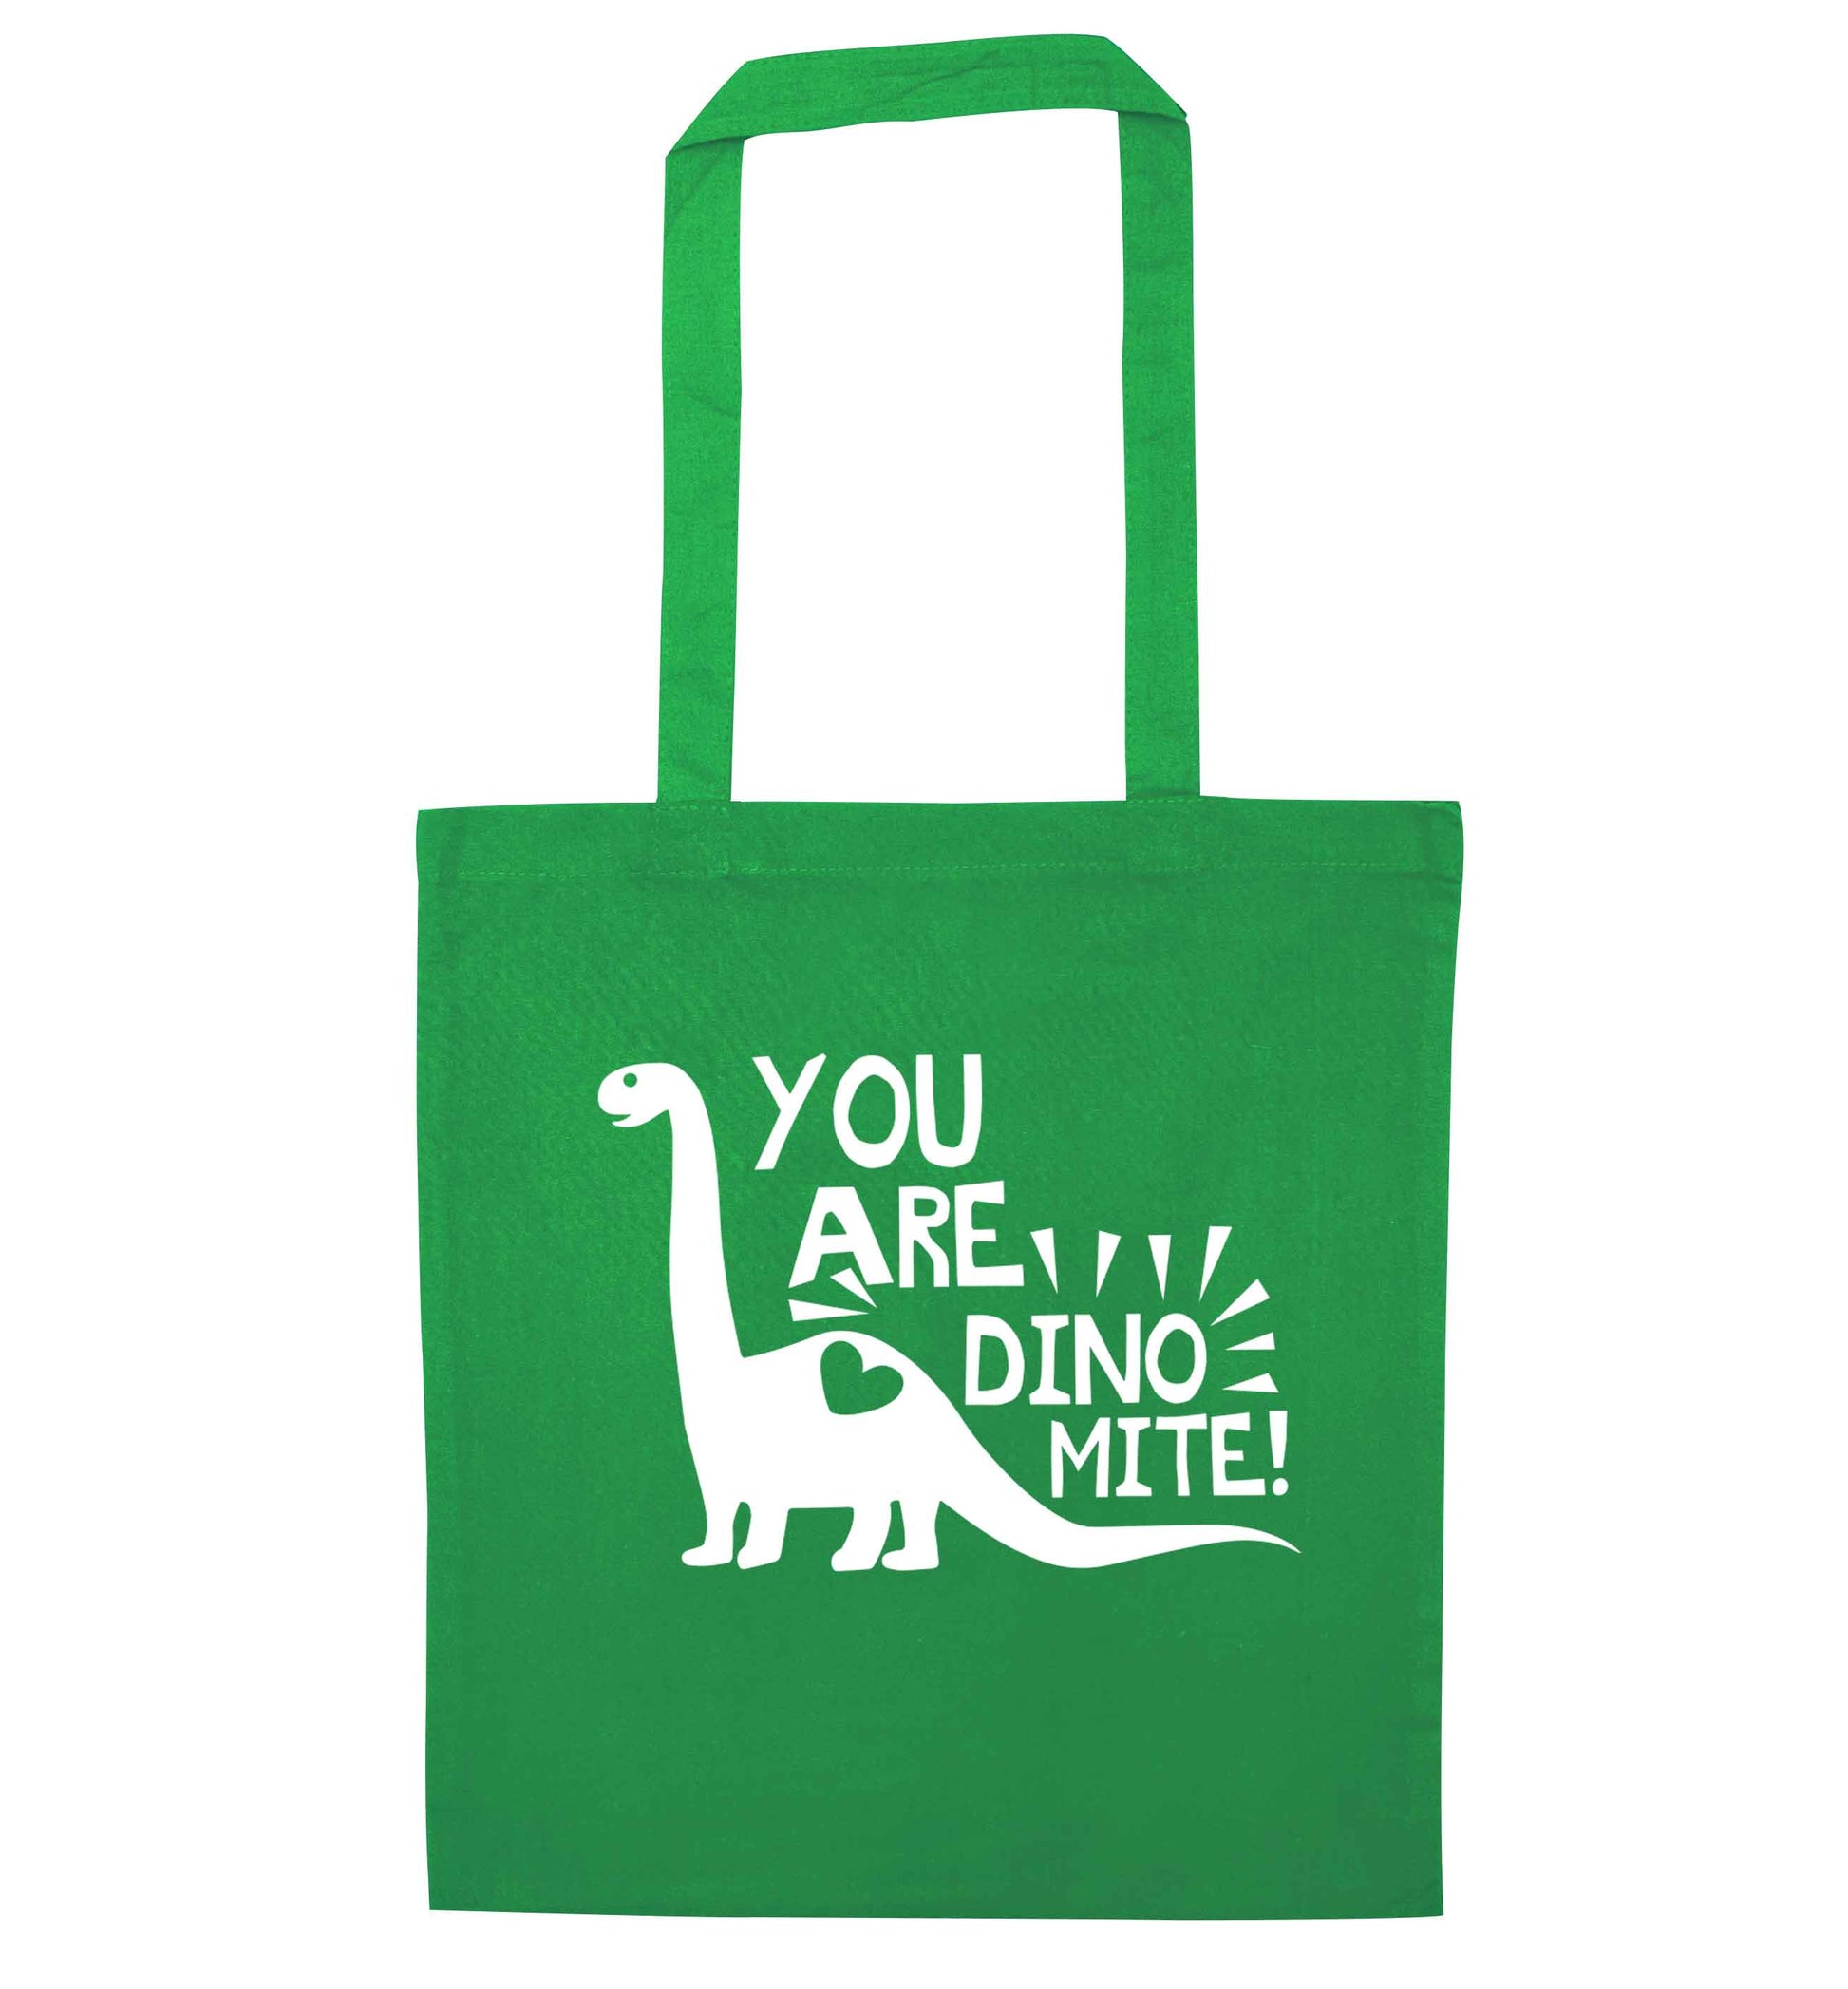 You are dinomite! green tote bag